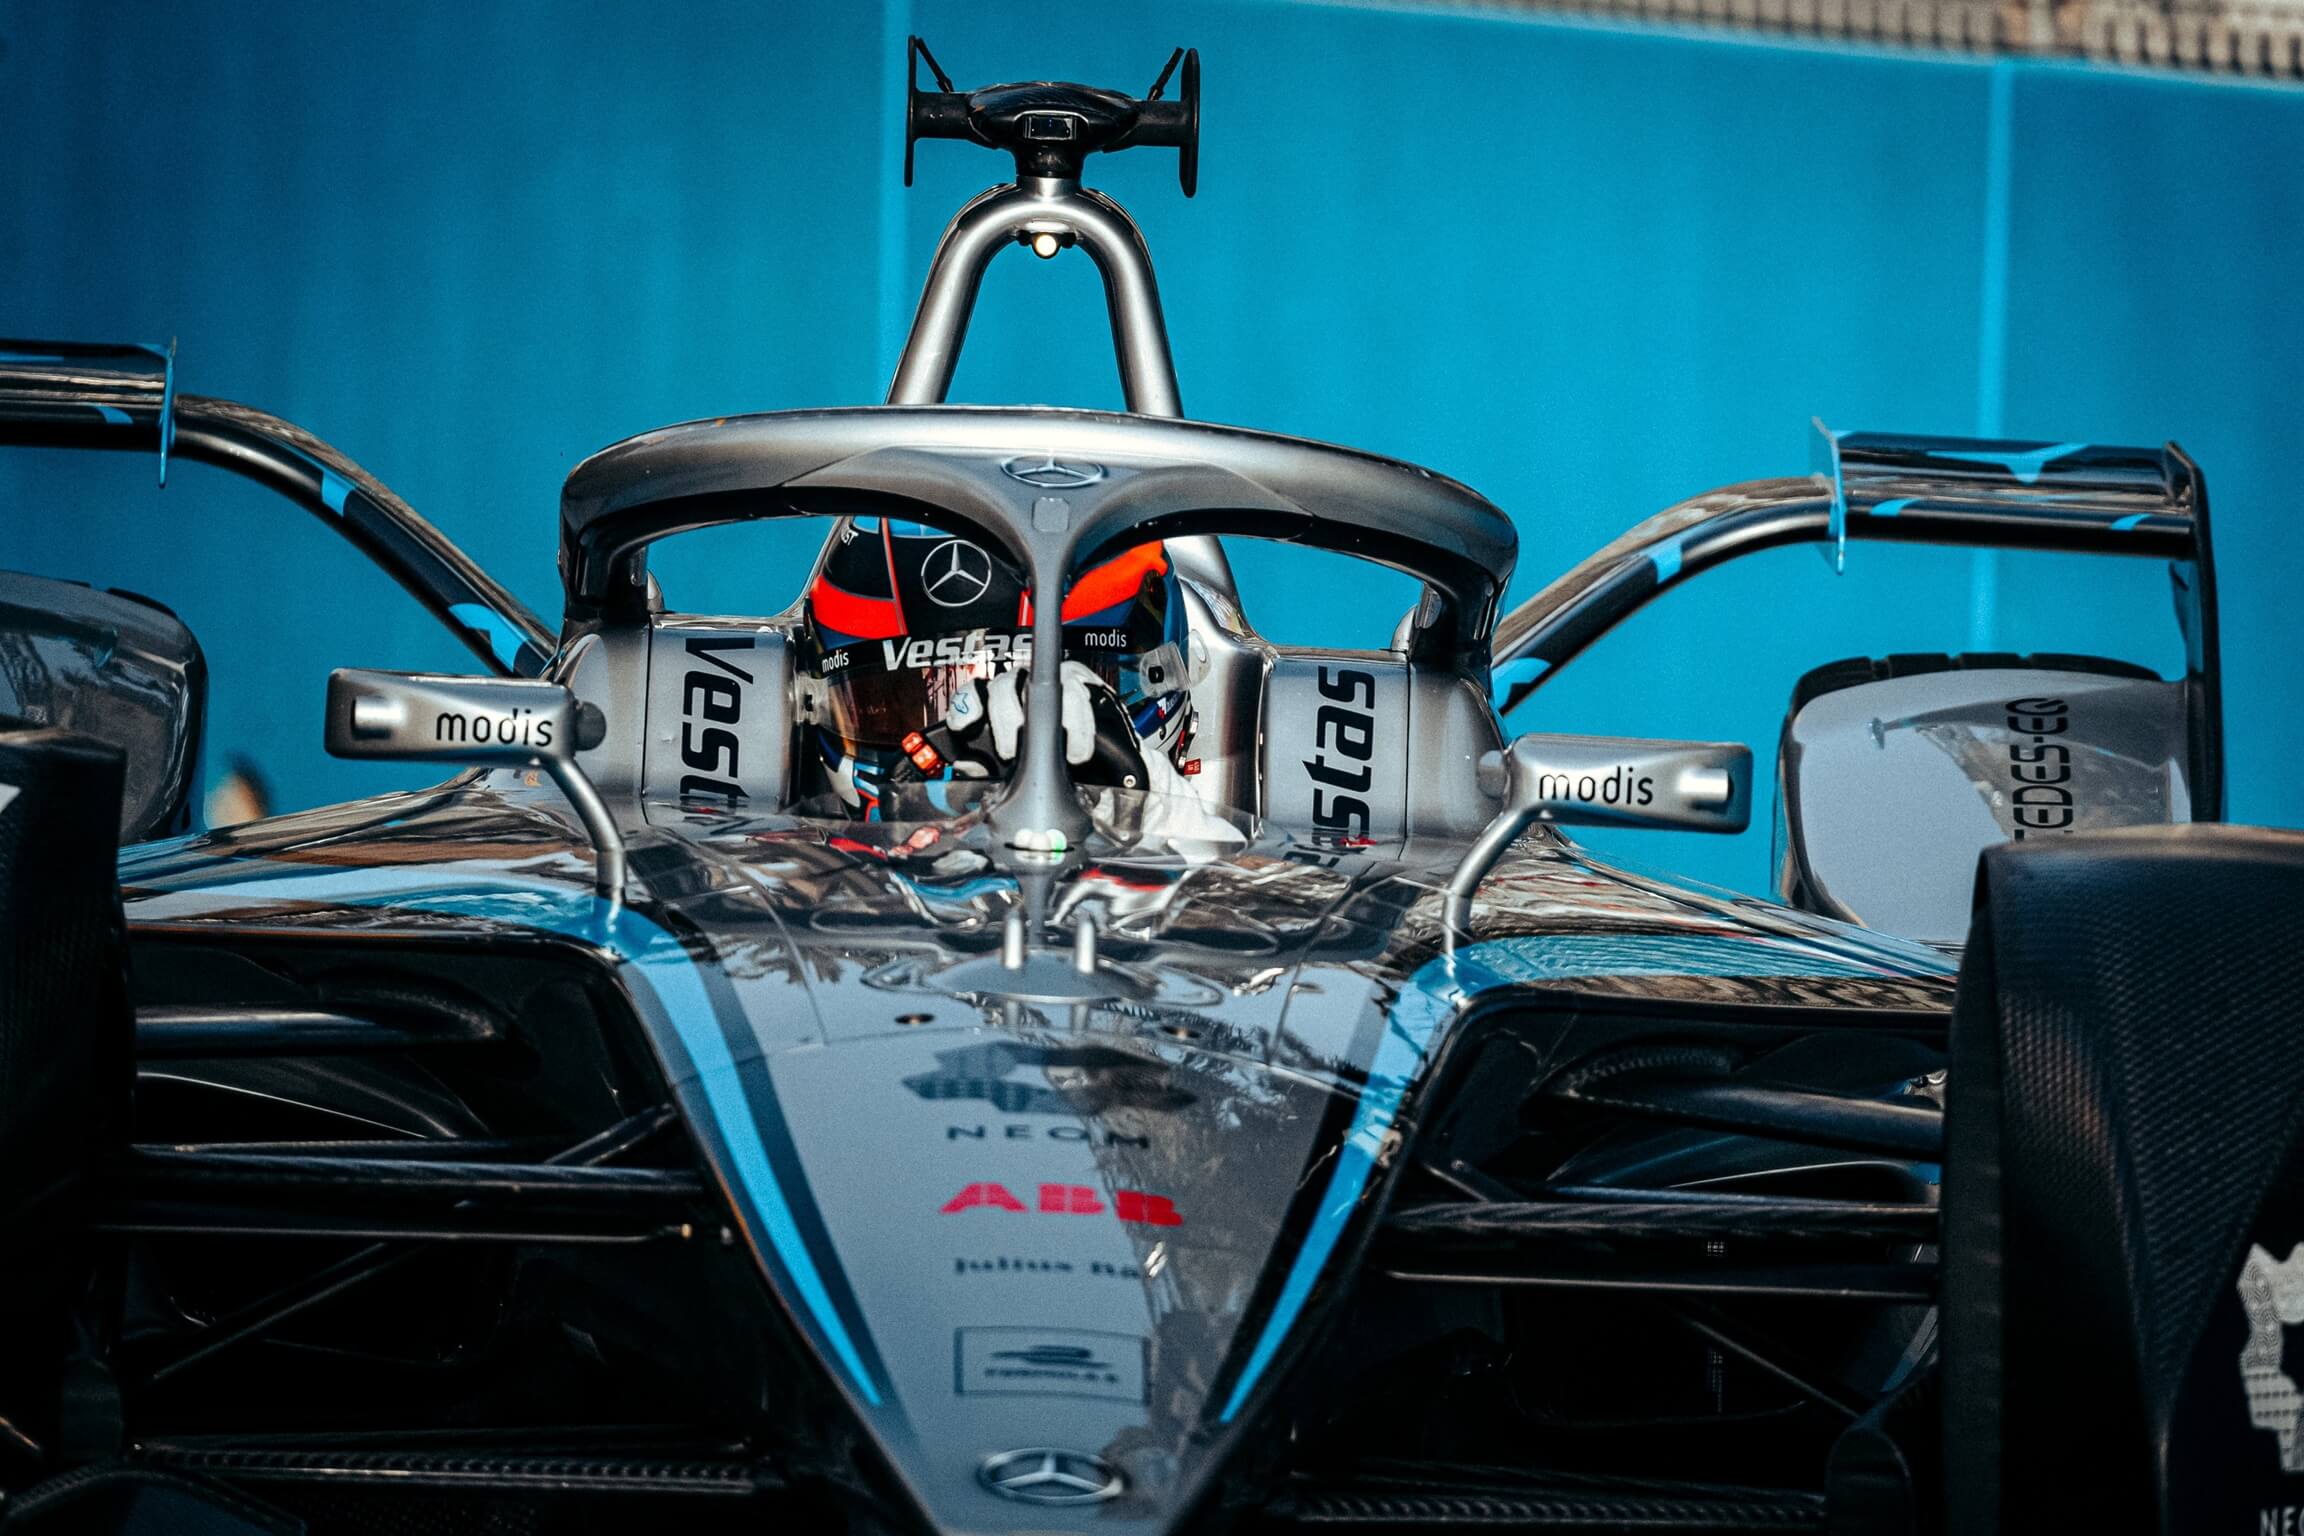 Formel E in Saudi-Arabien De Vries and Vandoorne feiern Mercedes-Doppelsieg beim Saisonauftakt 2022